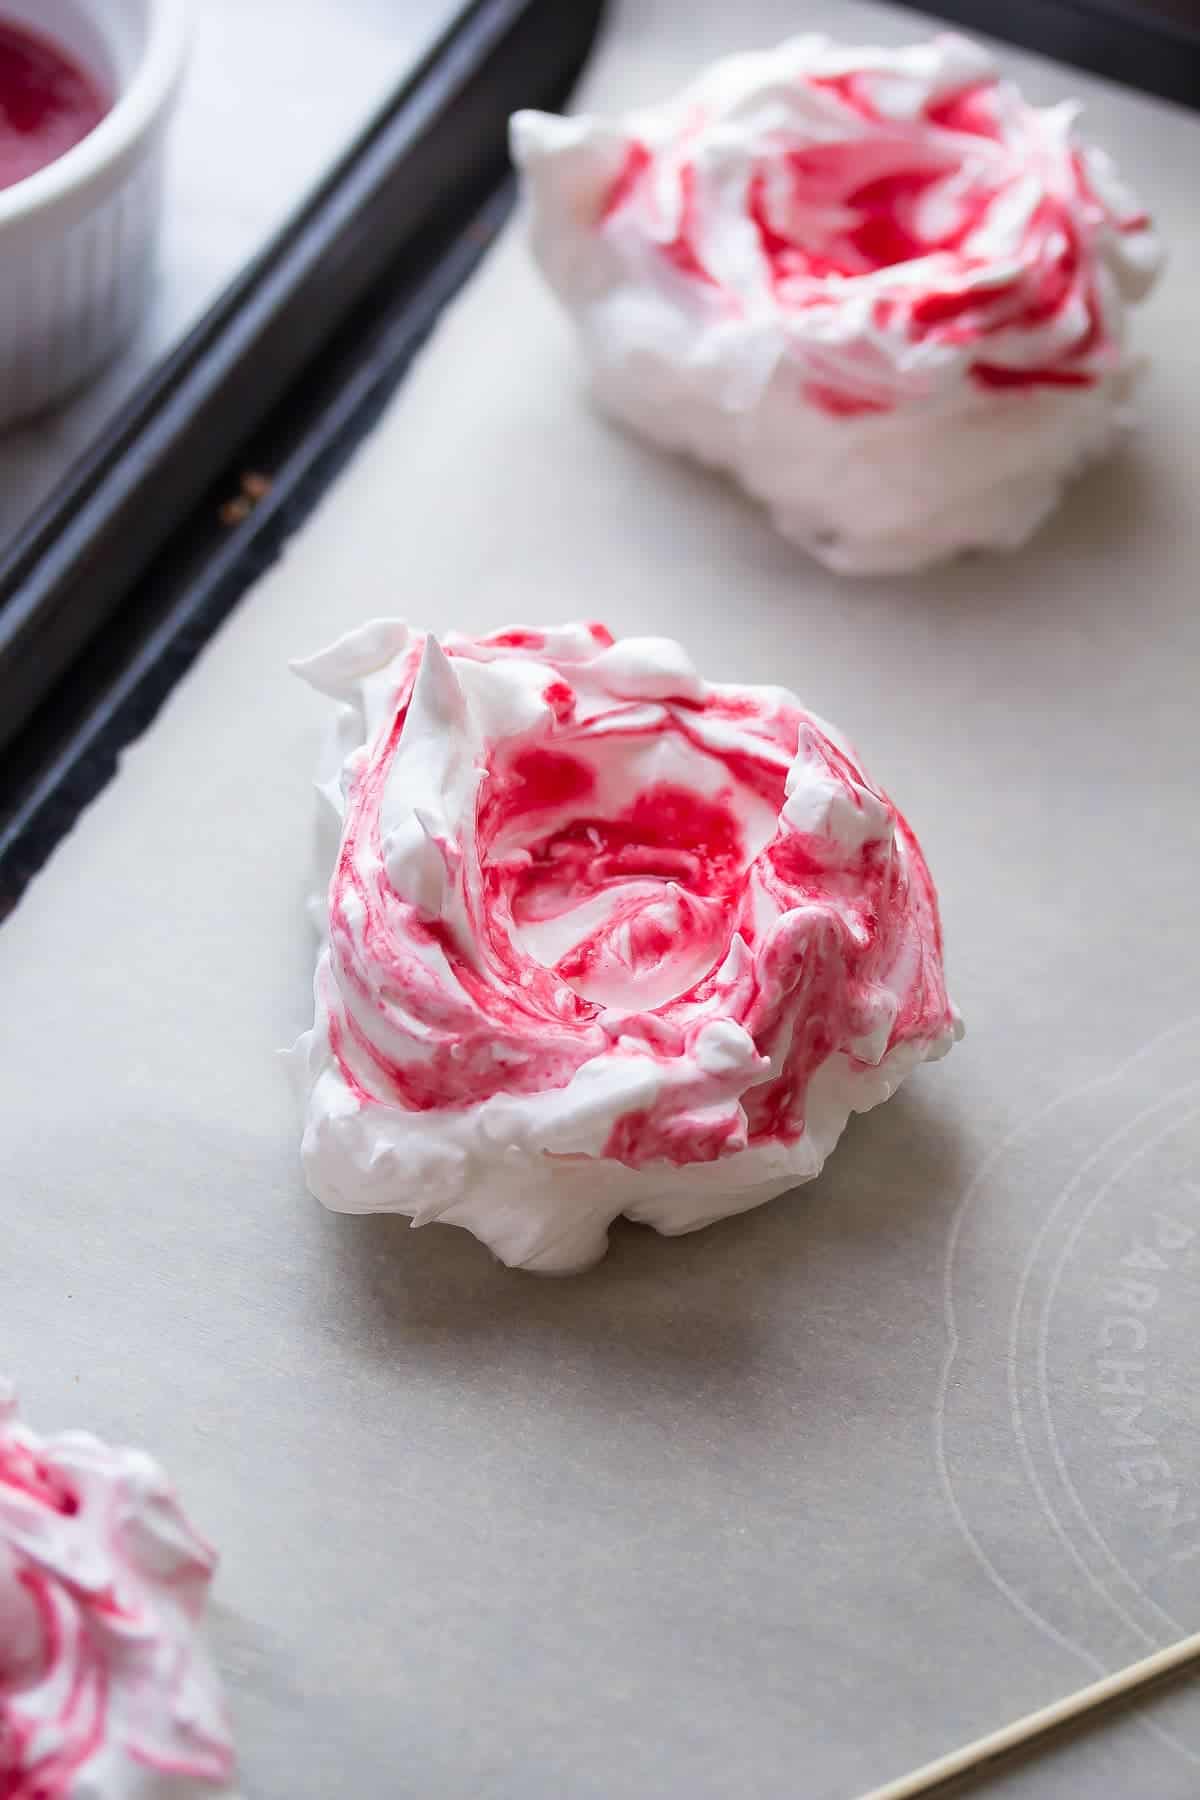 swirled raspberry meringue nests on baking sheet before baking through